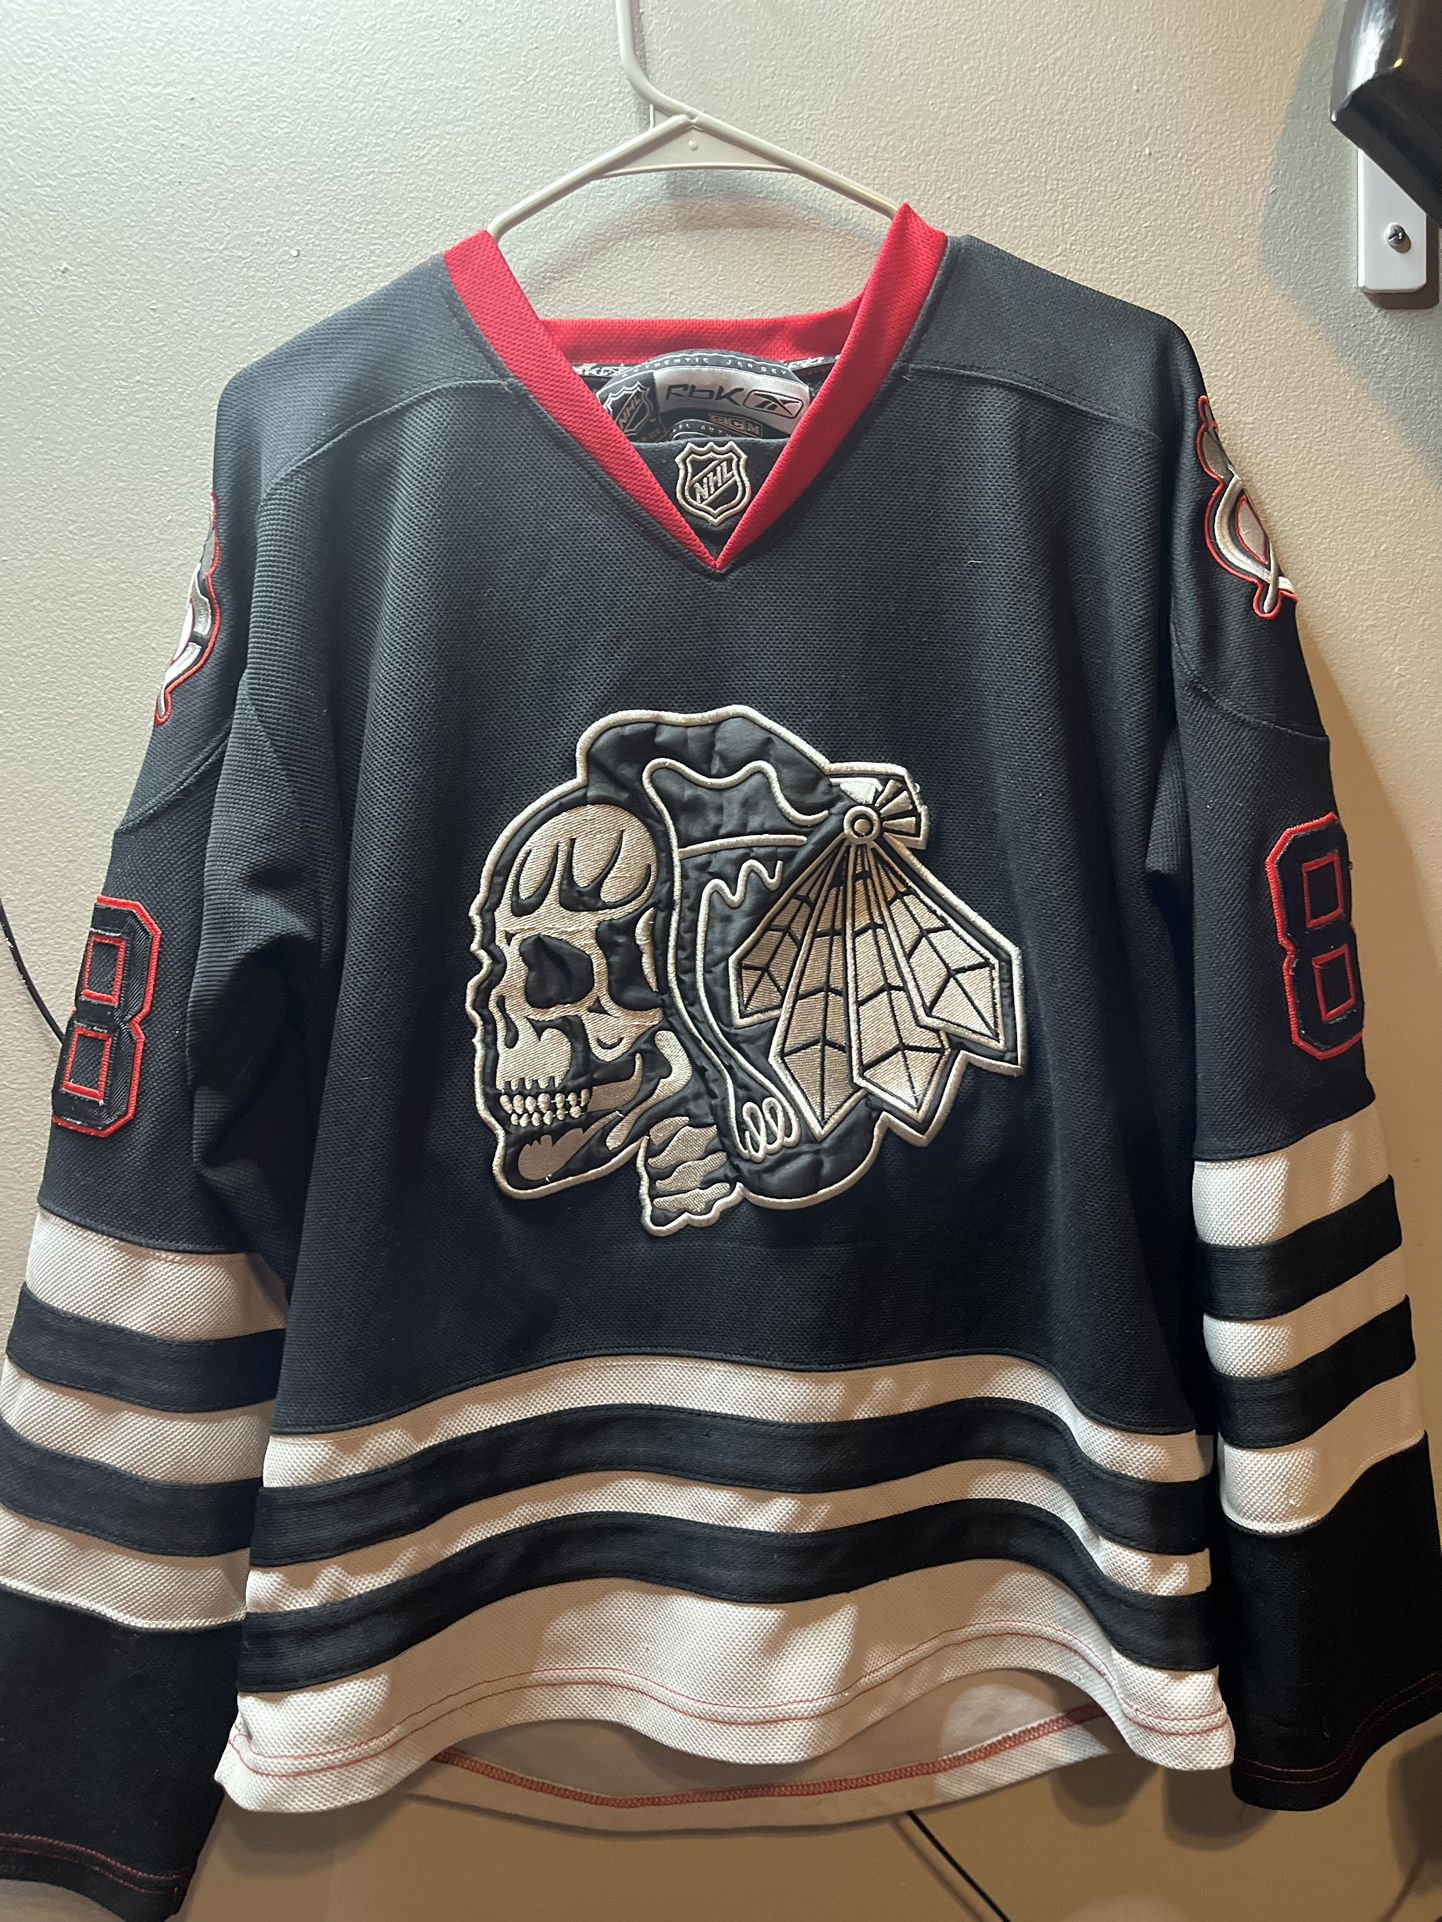 Patrick, Kane Chicago, Blackhawks jersey size medium for Sale in West  Babylon, NY - OfferUp